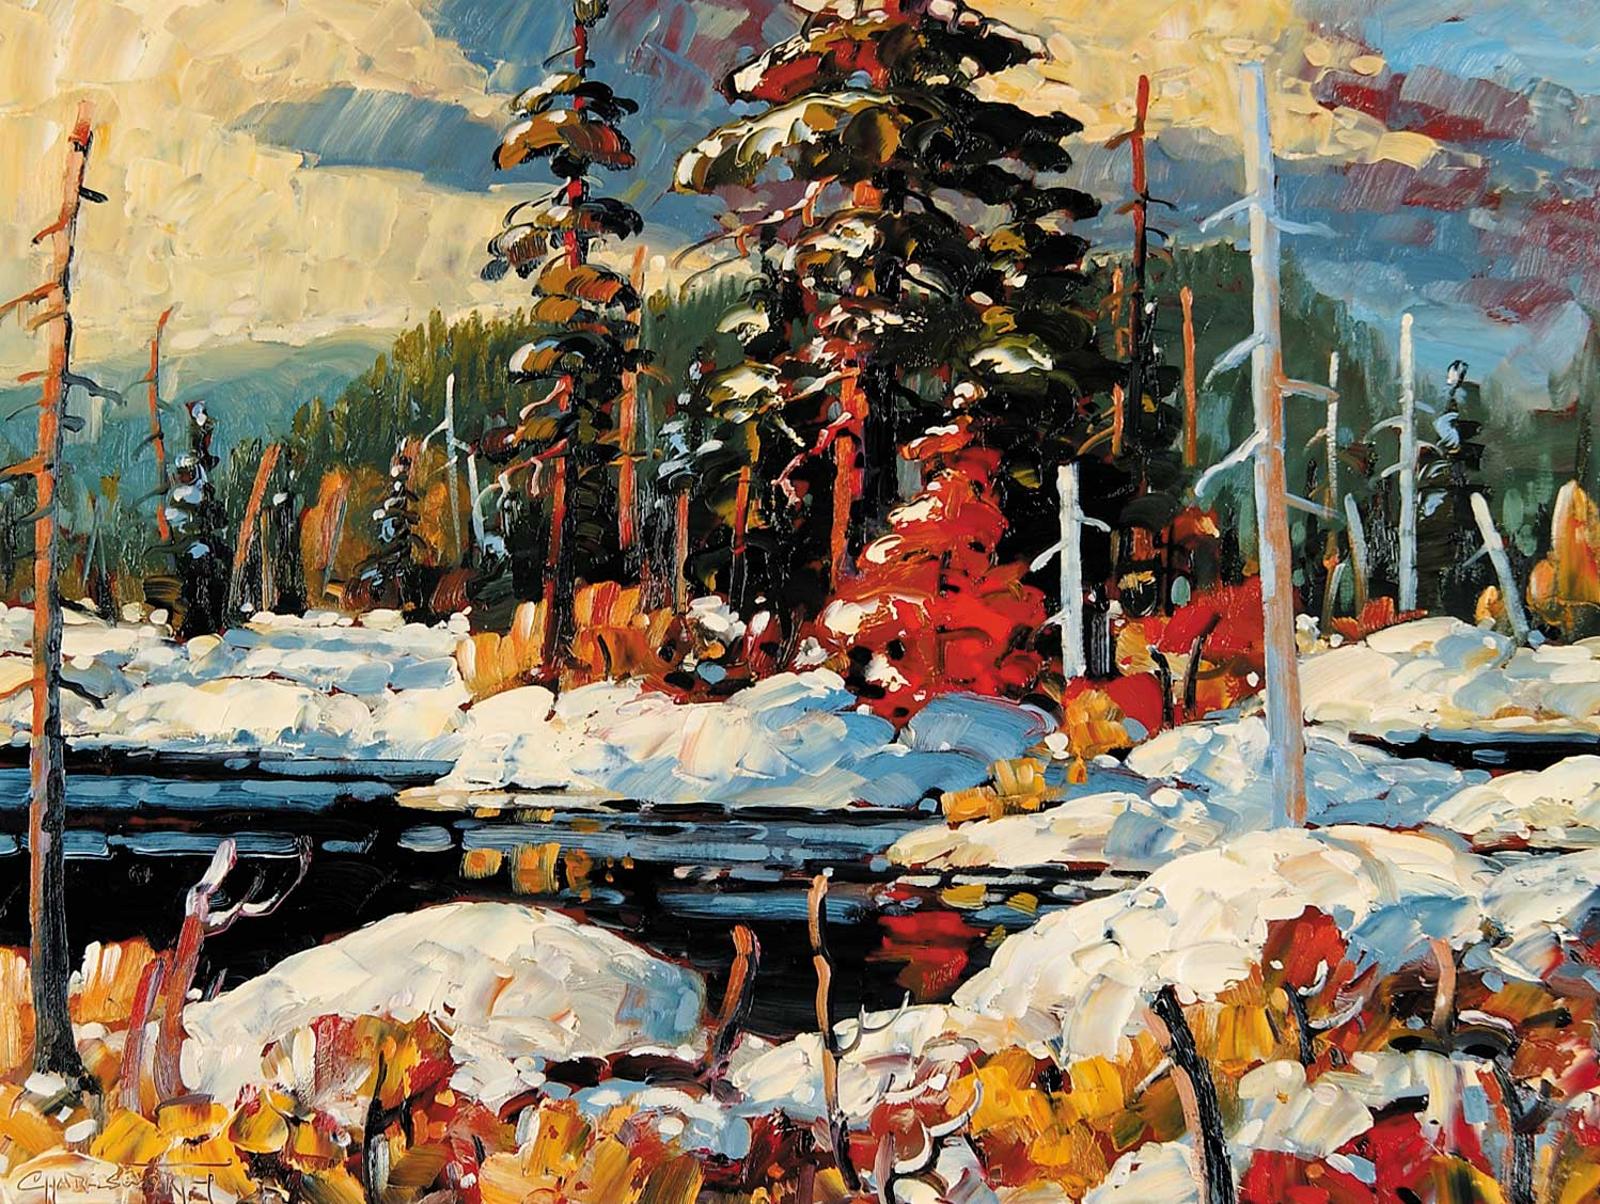 Rod Charlesworth (1955) - Early Snow, Northern Ontario